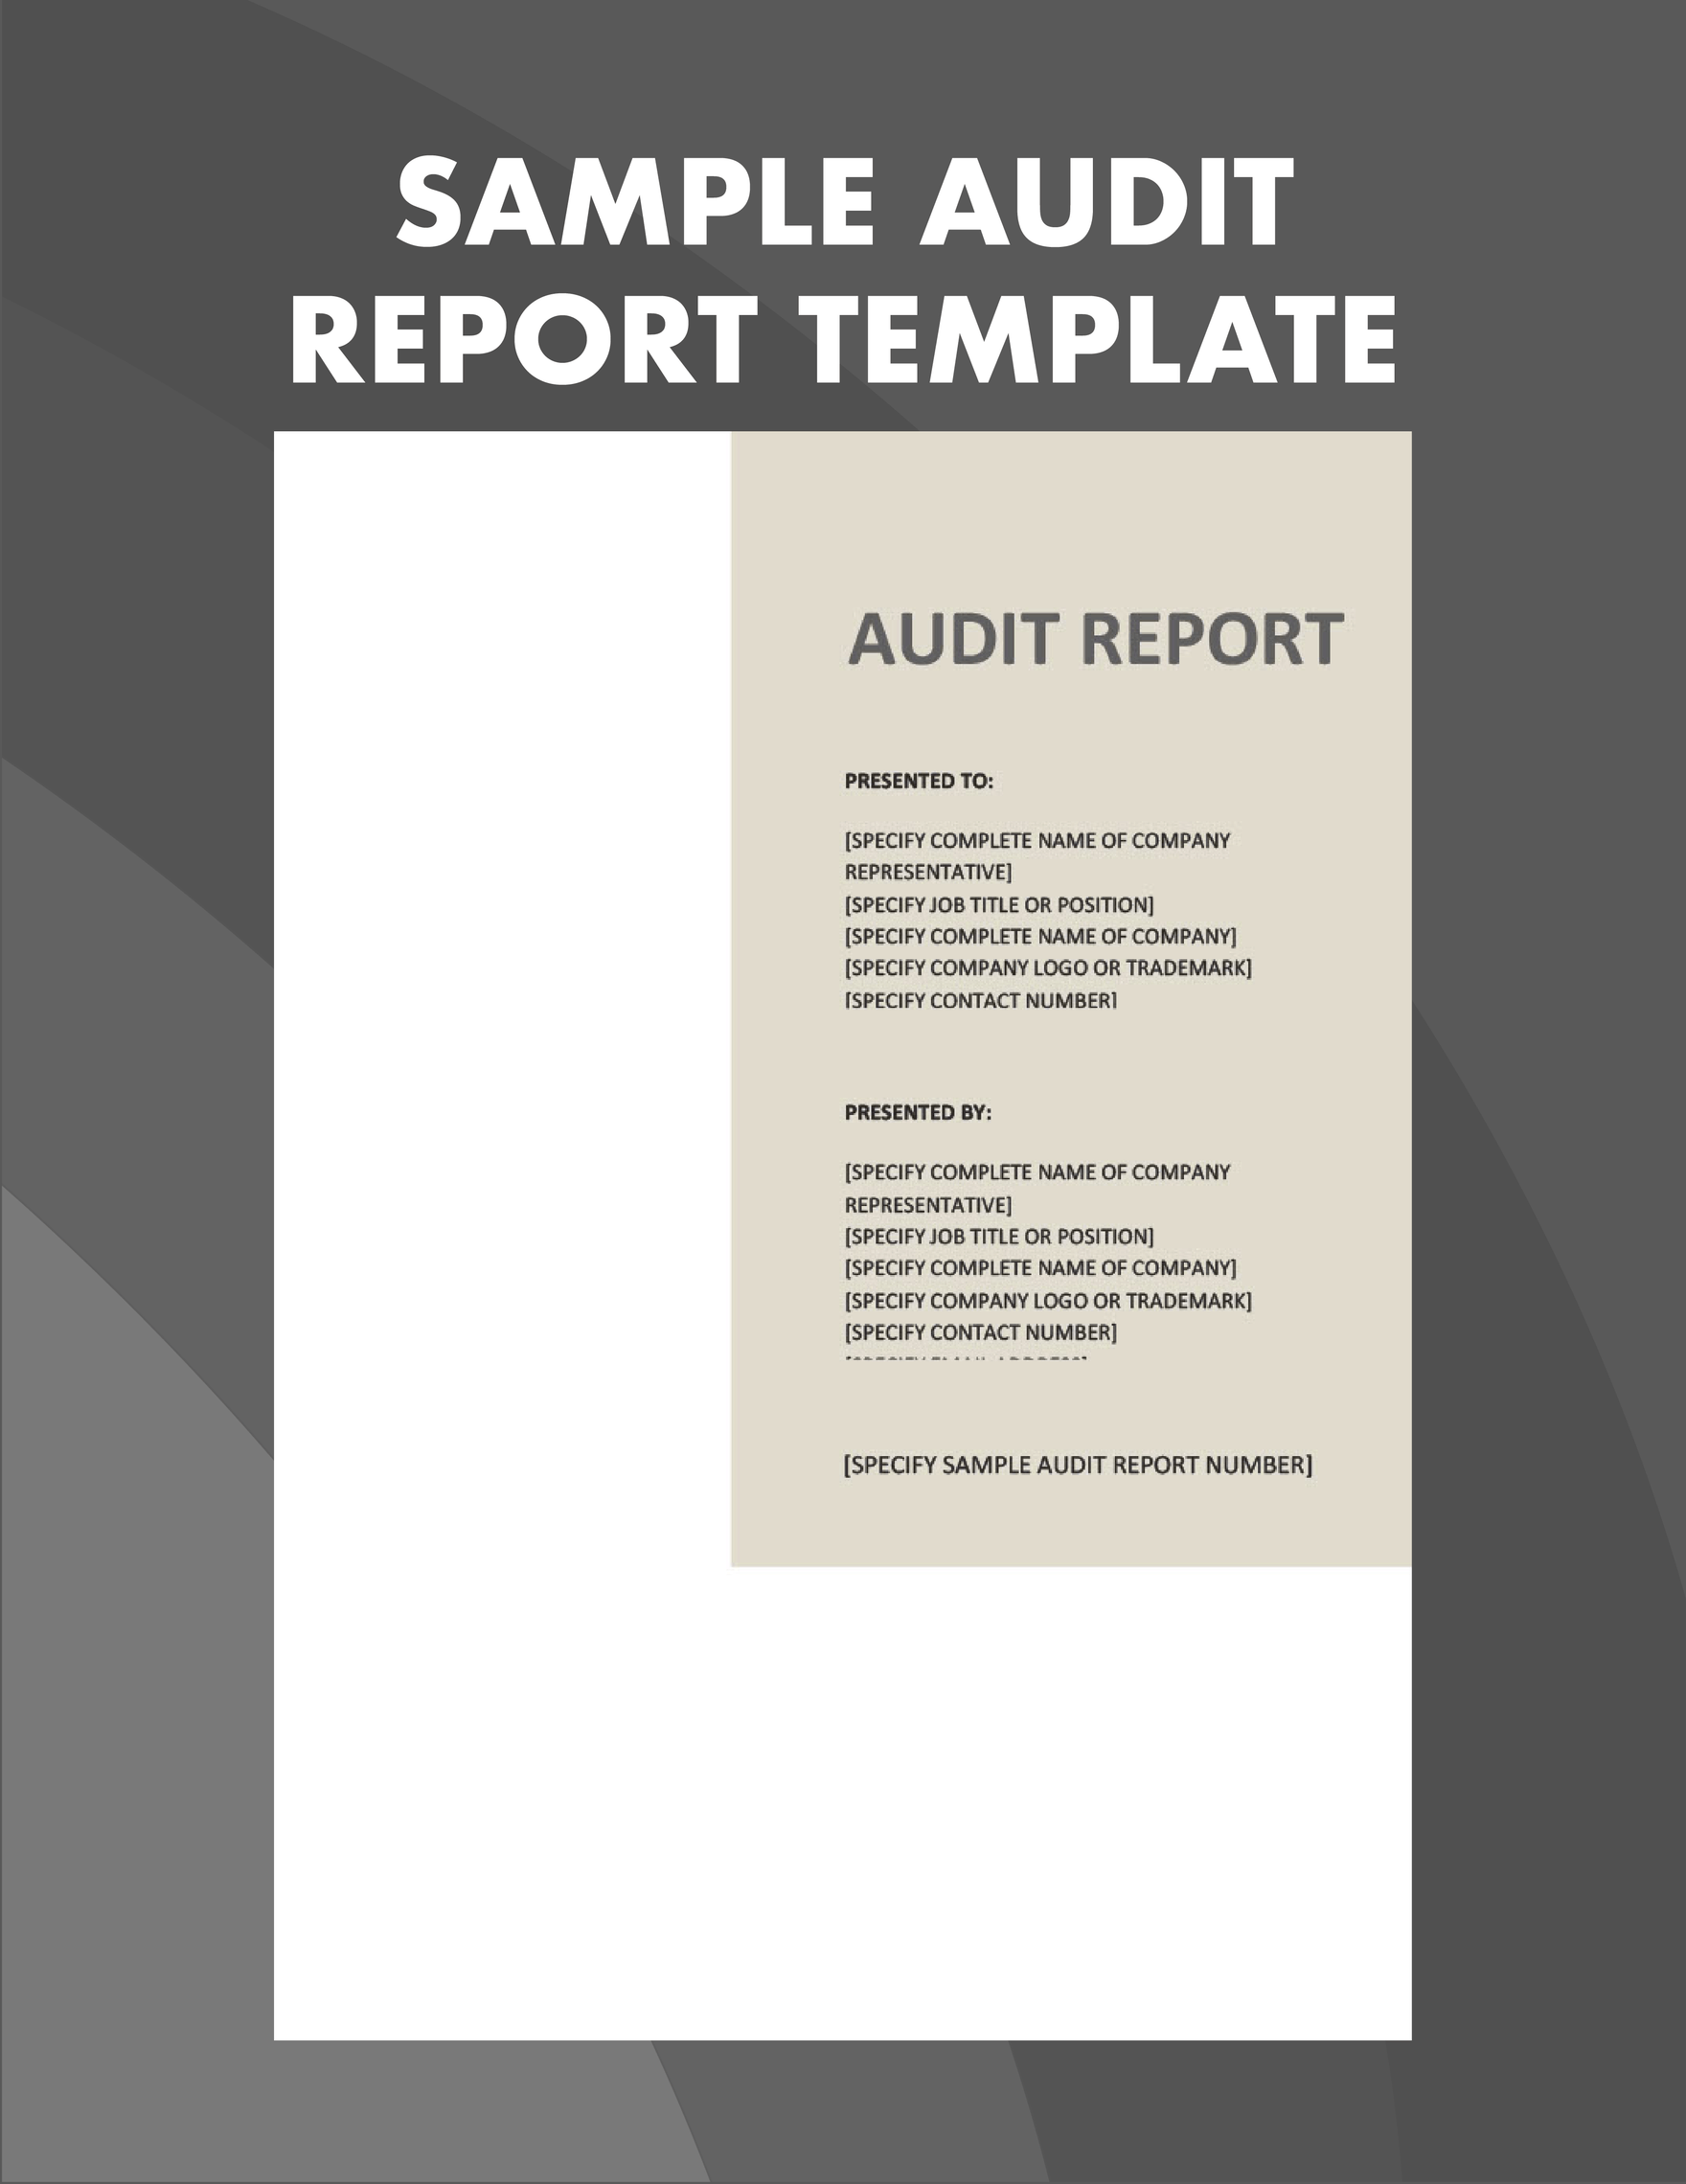 Sample Audit Report Template